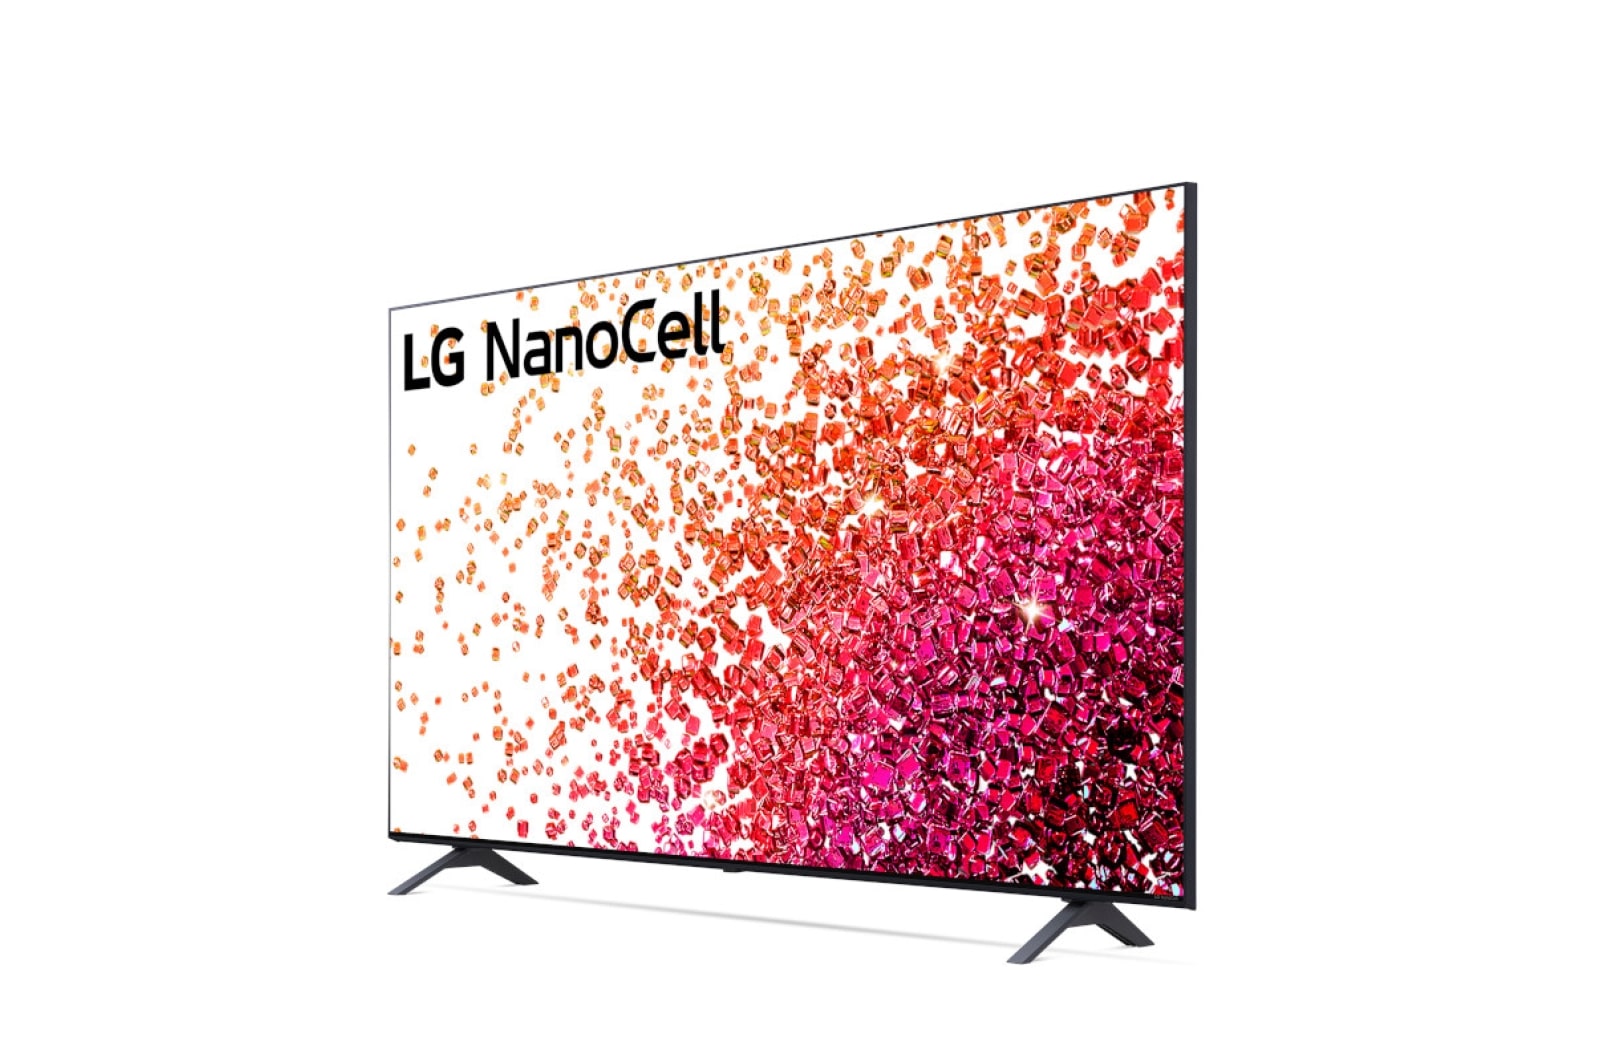 Lg Nanocell 75 Series 55 Inch Tv 55nano75upa Lg Usa 9134